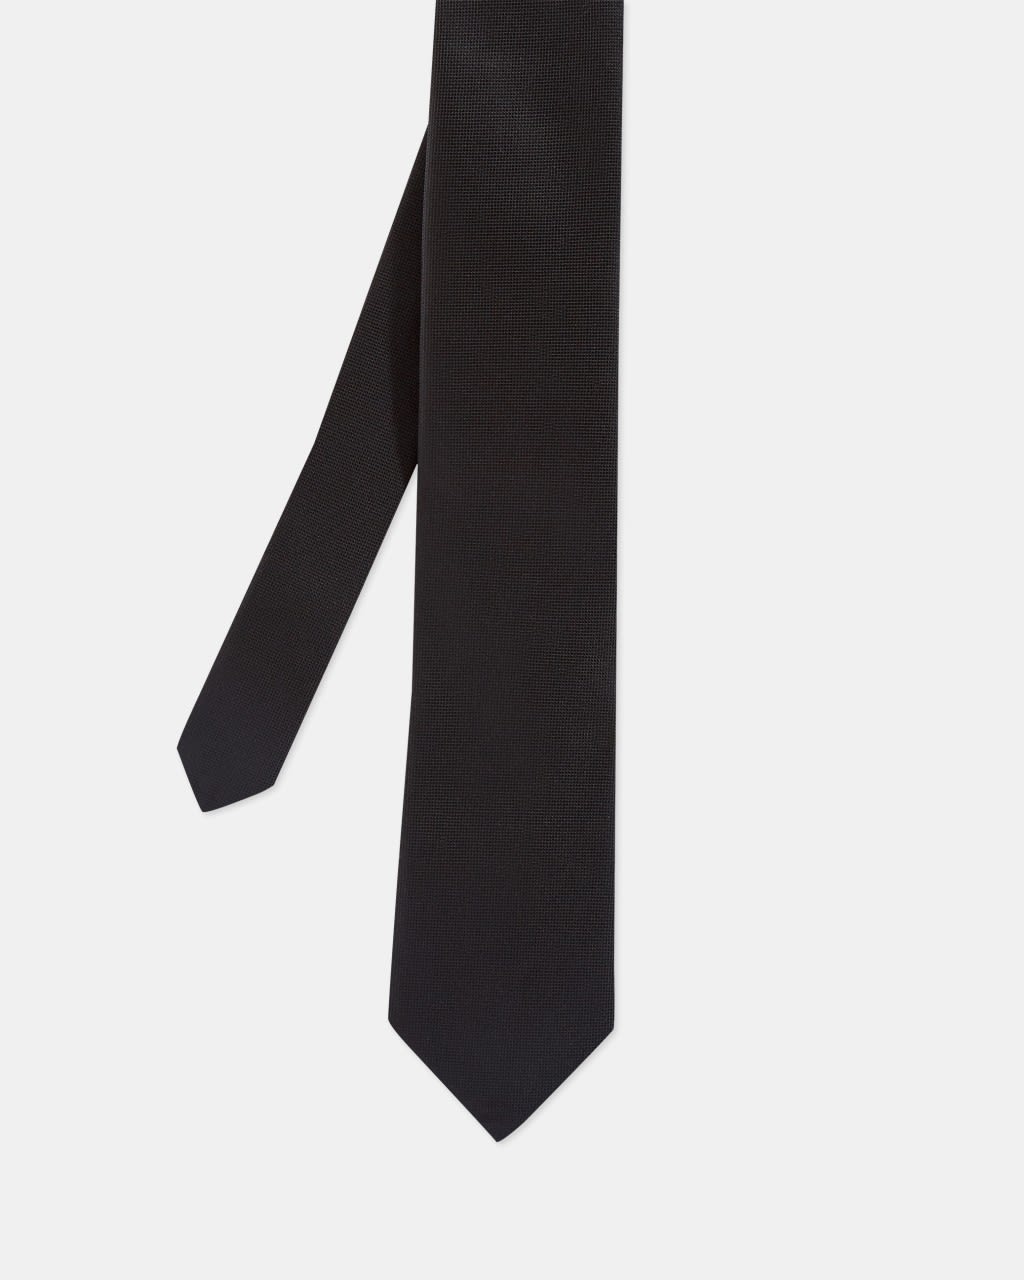 Ted Baker Men's Plain Silk Tie in Black, Amaze